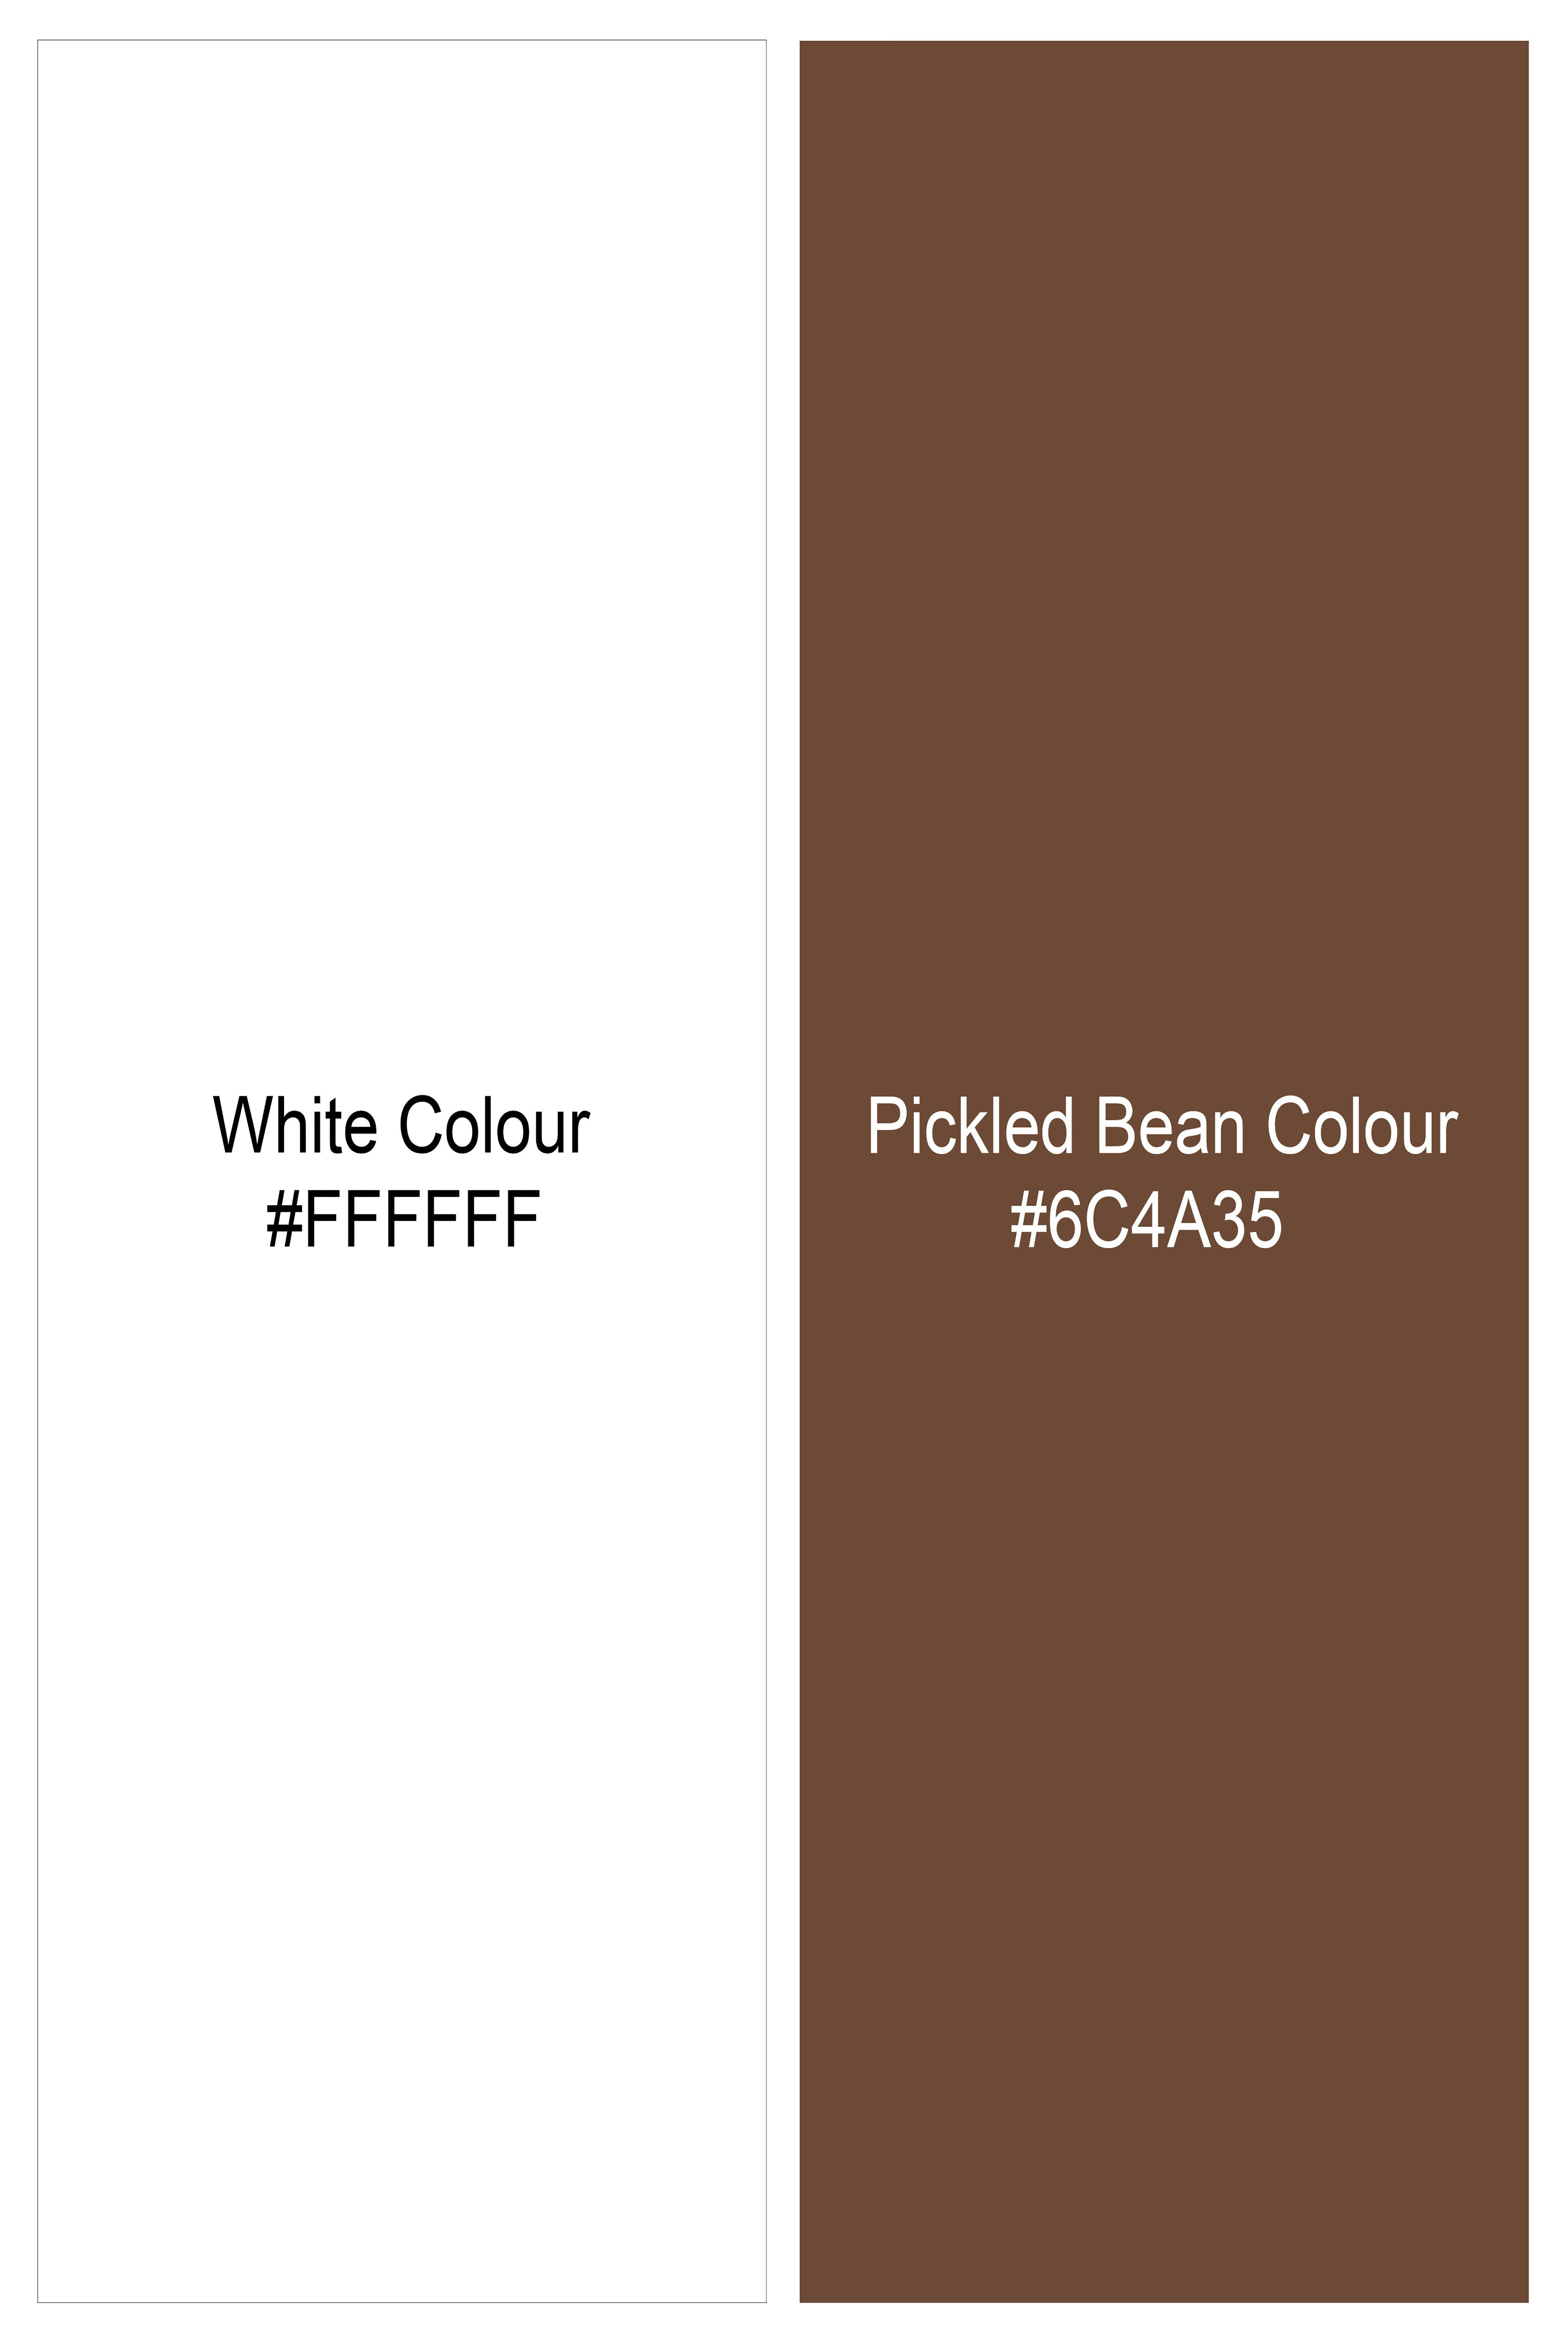 Pickled Brown Super Soft Premium Cotton Shorts SR269-28, SR269-30, SR269-32, SR269-34, SR269-36, SR269-38, SR269-40, SR269-42, SR269-44